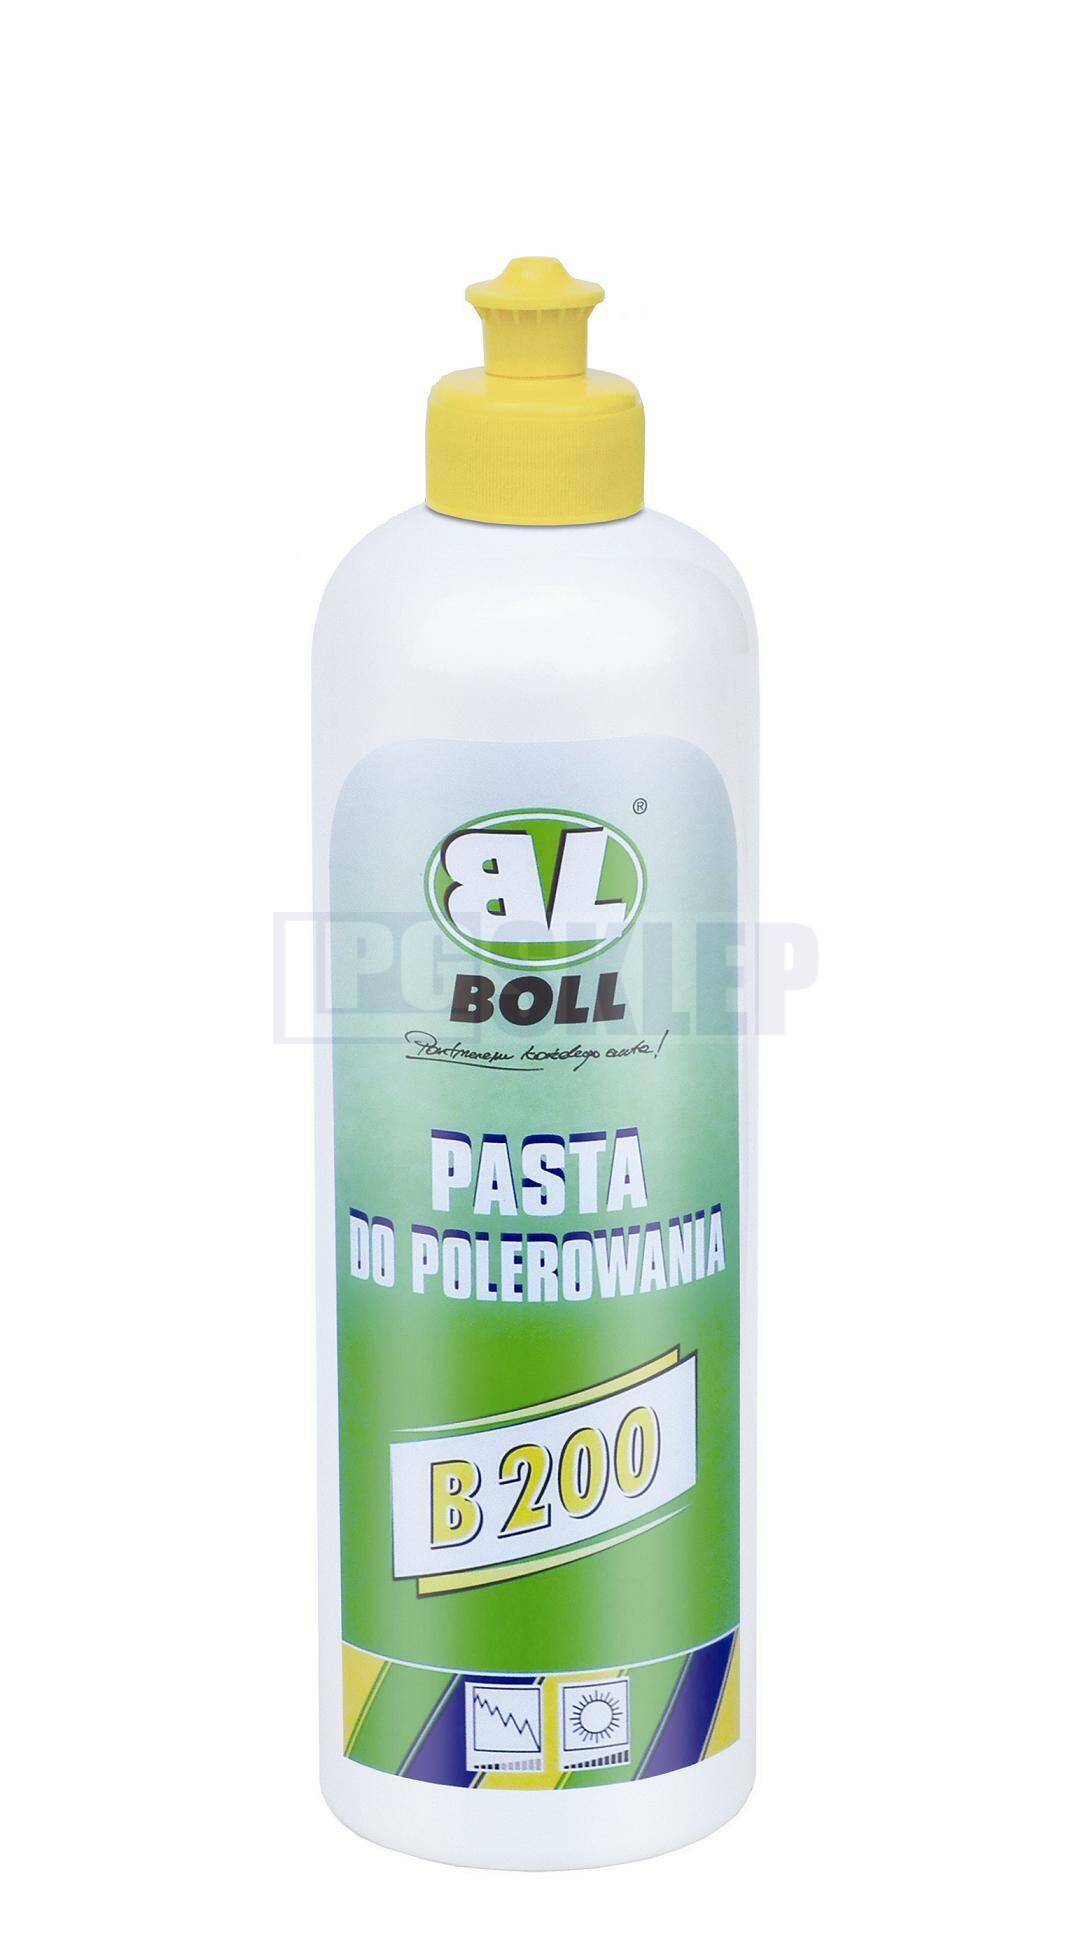 BOLL pasta do polerowania B200 500ml (Foto 1)